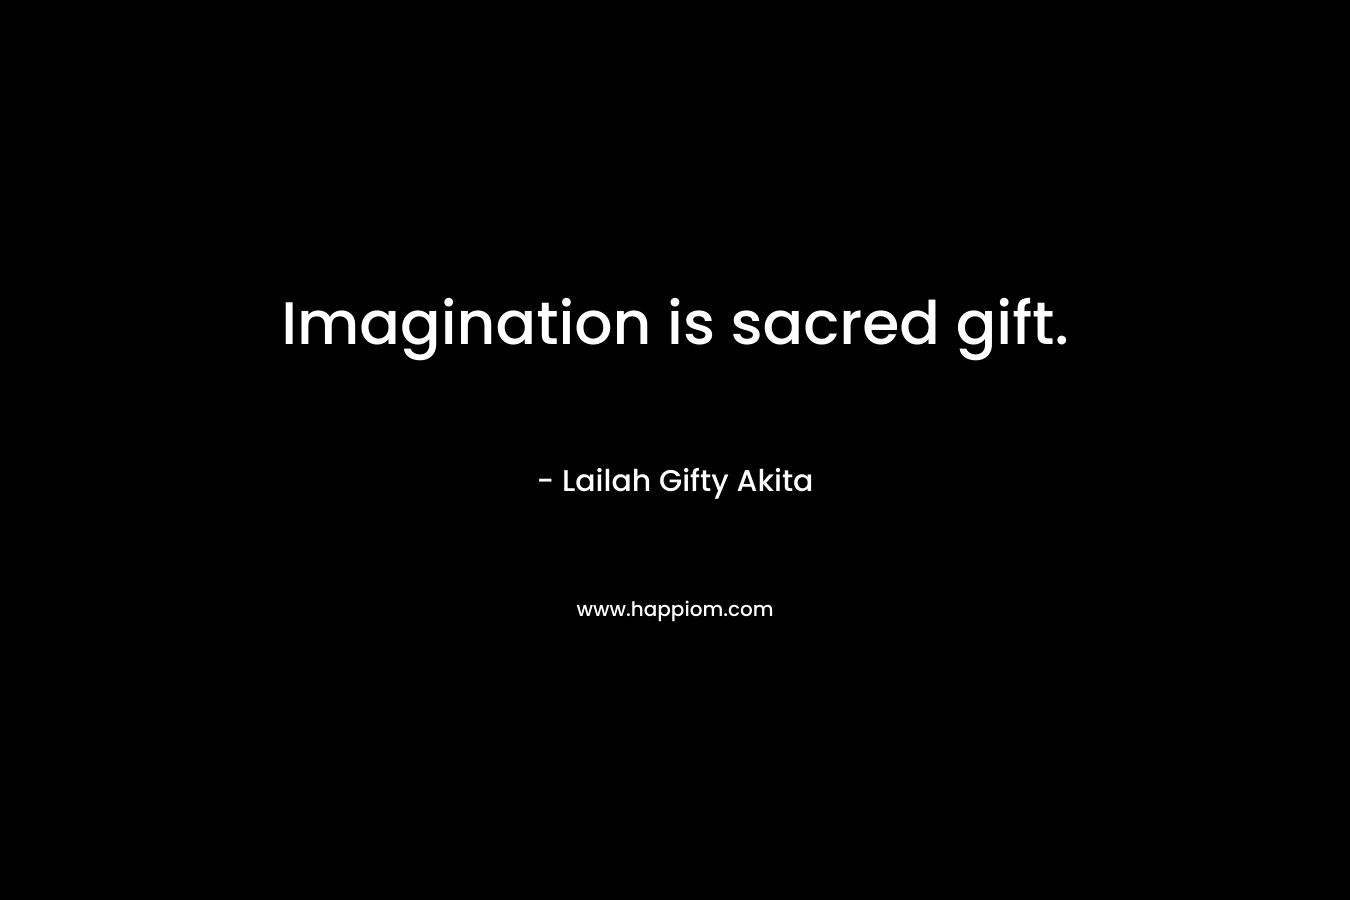 Imagination is sacred gift.